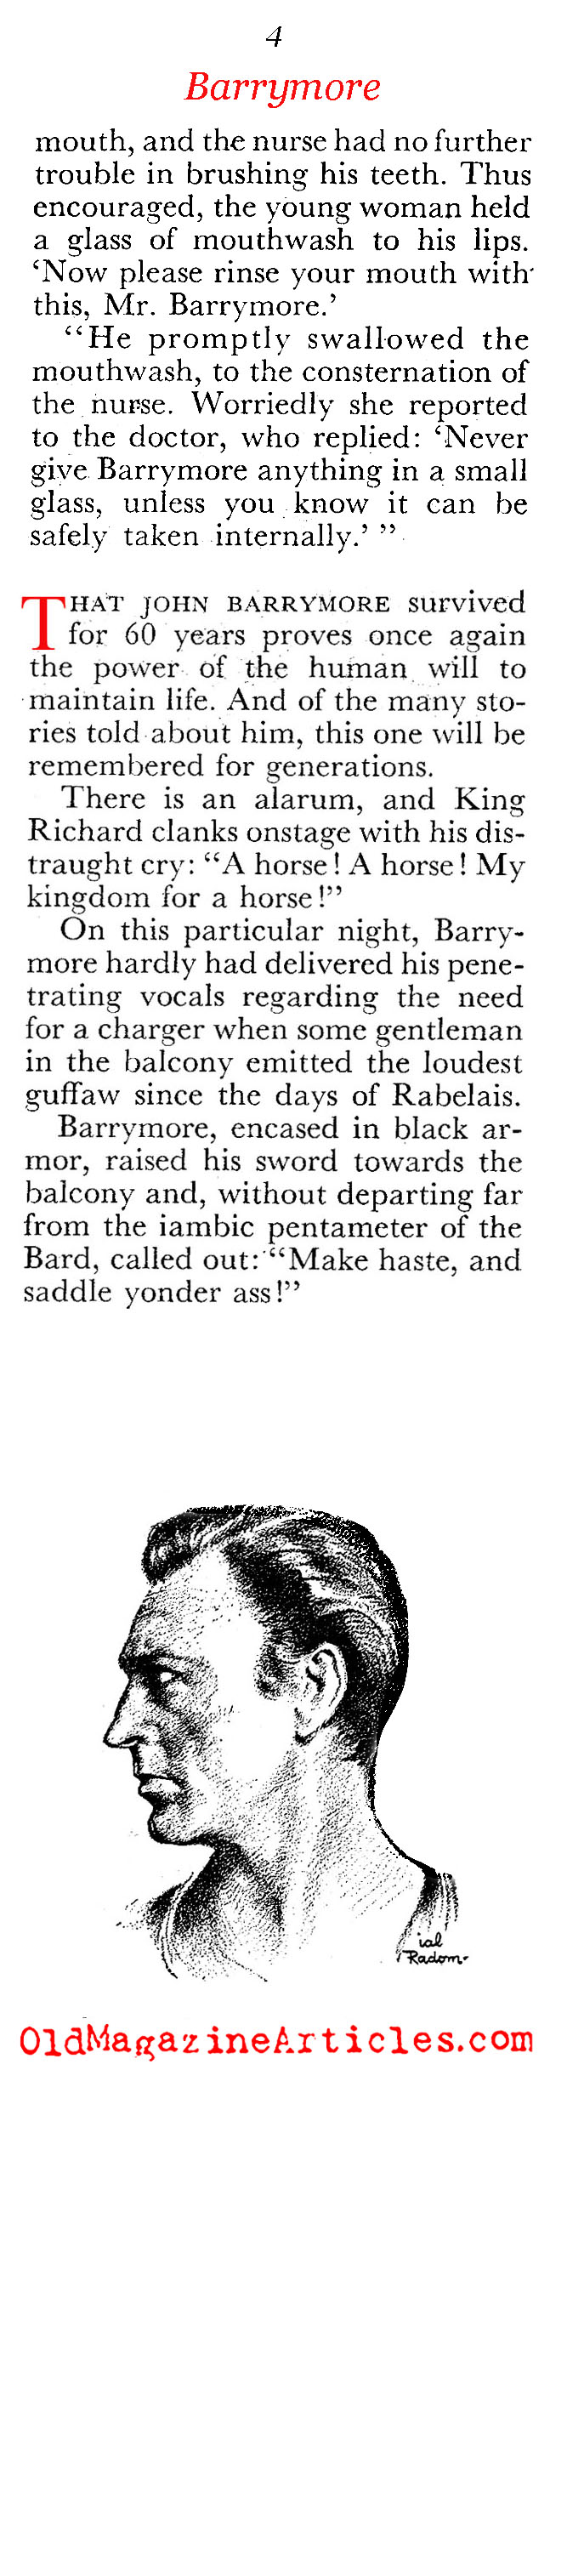 John Barrymore (Coronet Magazine, 1951)